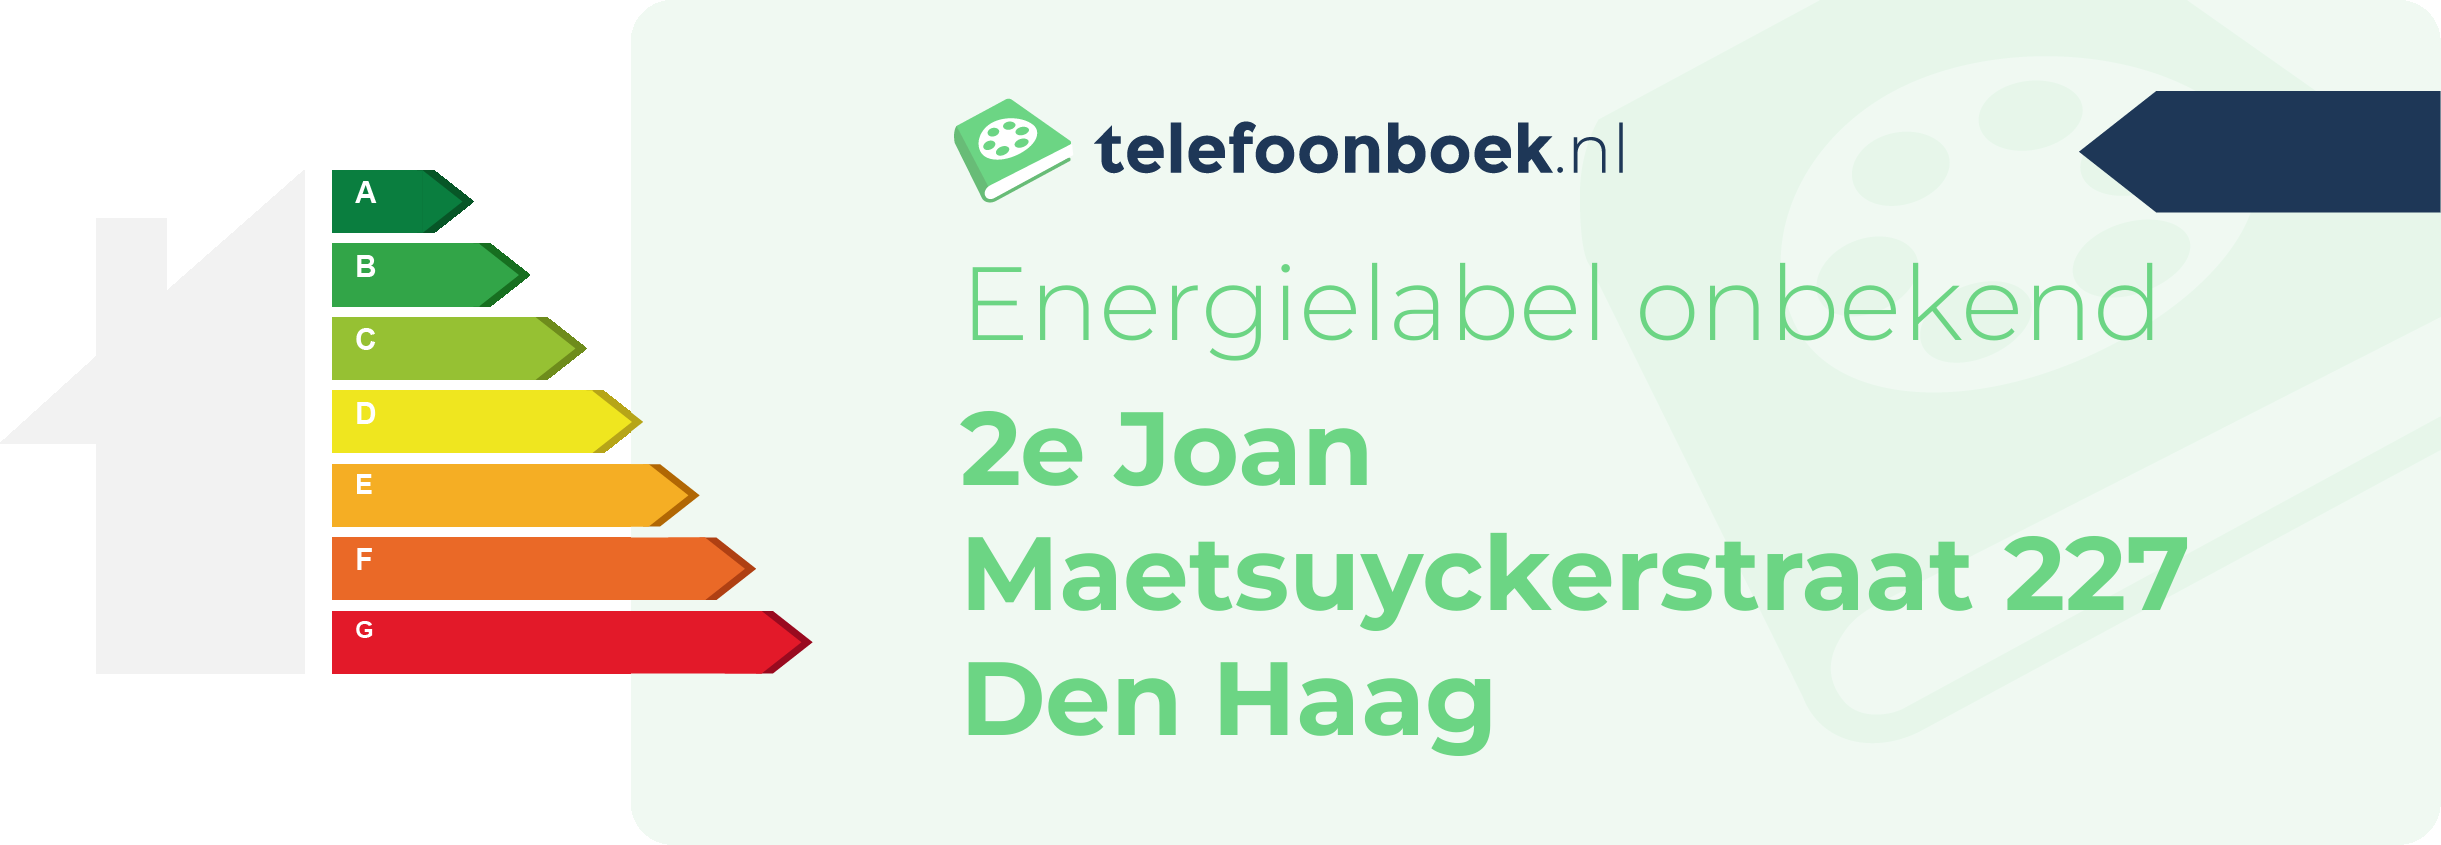 Energielabel 2e Joan Maetsuyckerstraat 227 Den Haag